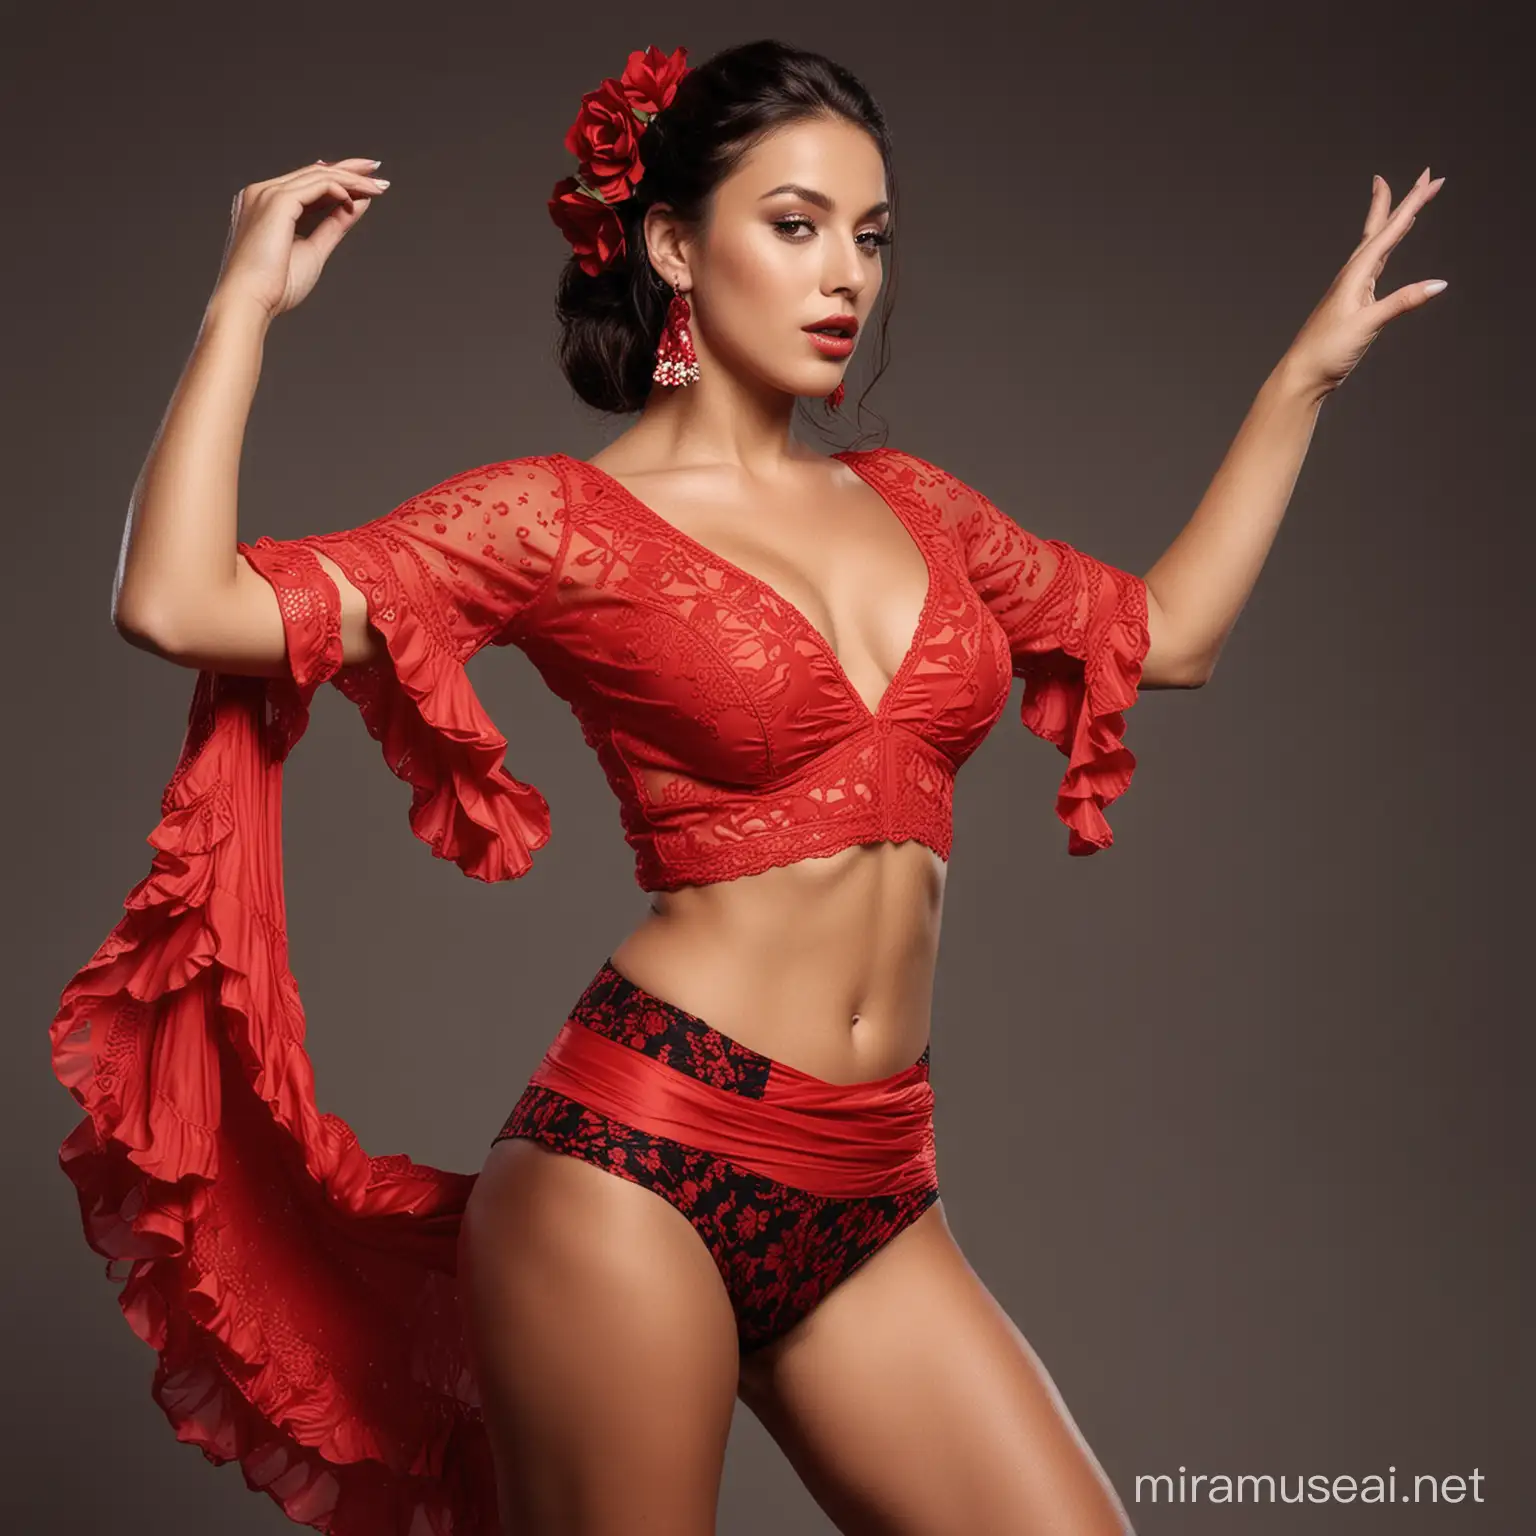 Flamenco tänzerin
model very sexy nice body